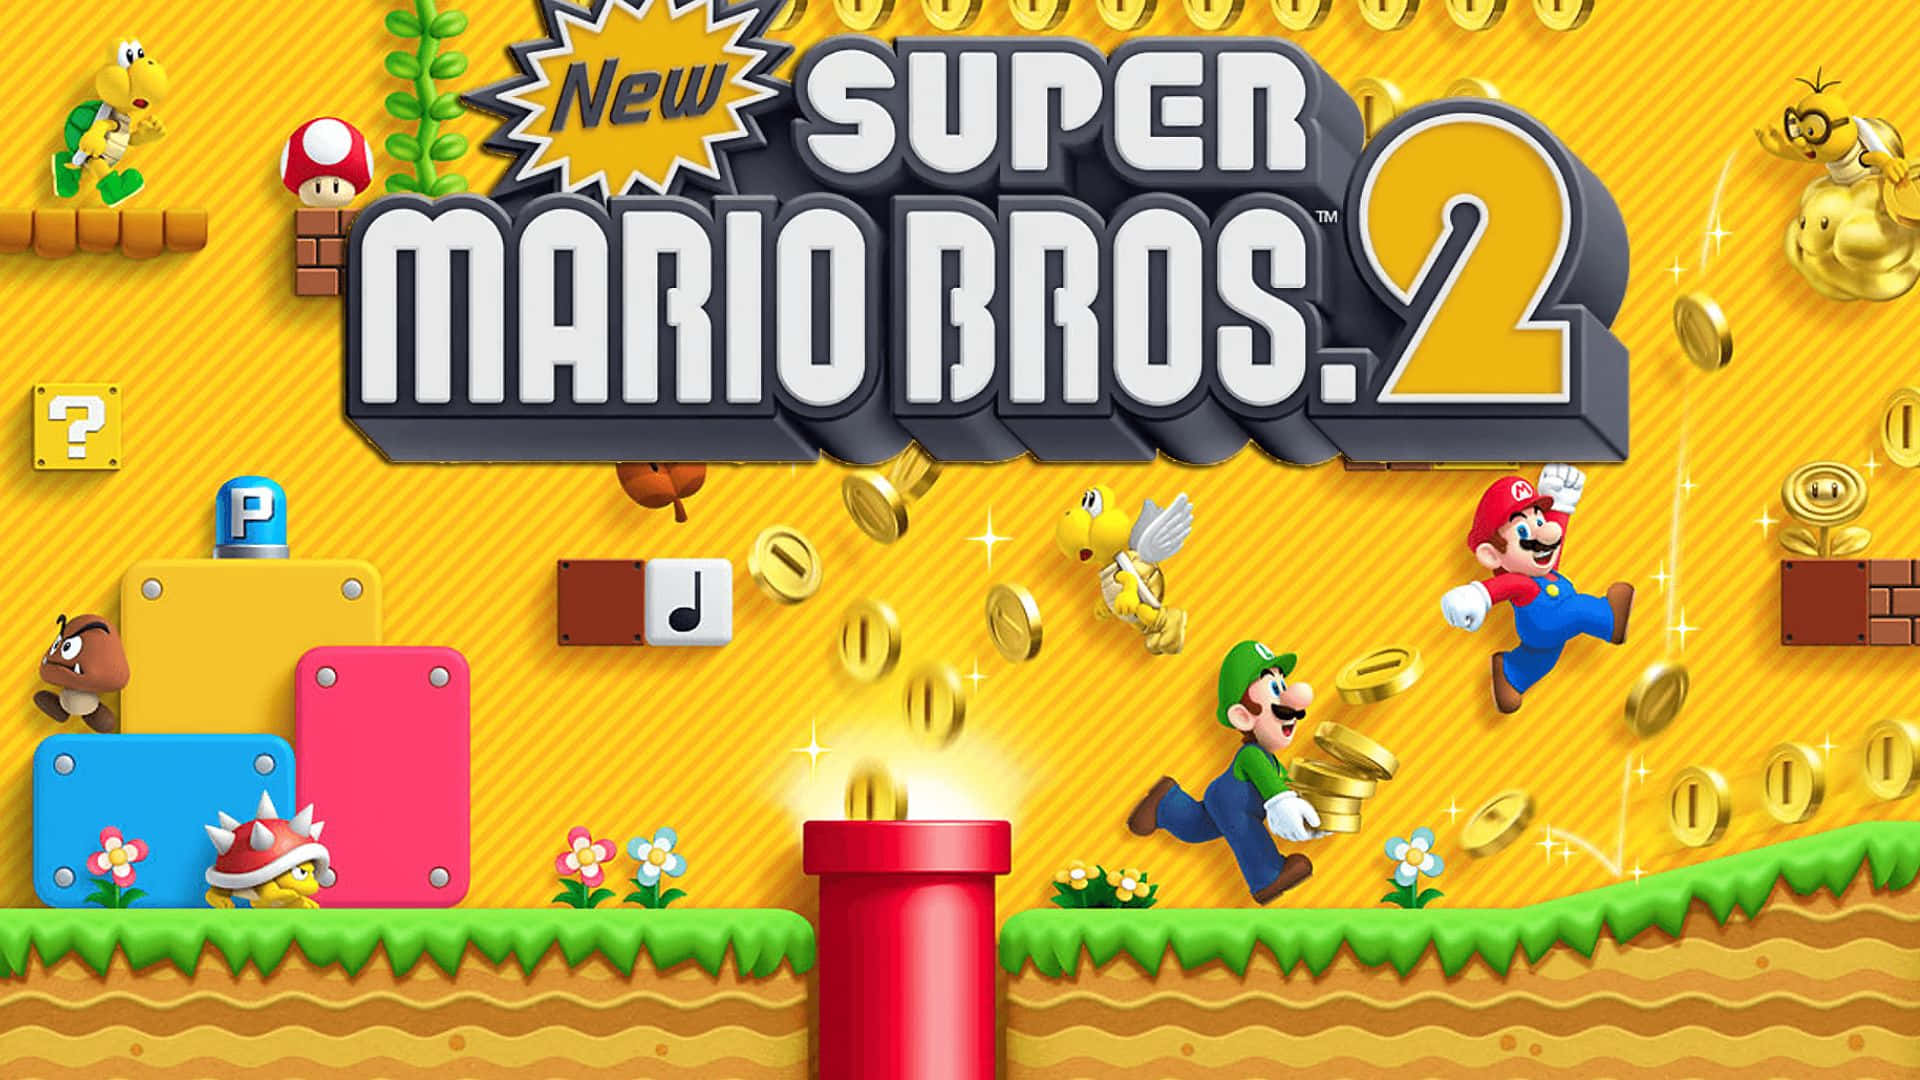 Super mario bros game. New super Mario Bros 2 Nintendo 3ds. New super Mario Bros. Нинтендо ДС. New super Mario Bros 2 Wii. New super Mario Bros Nintendo DS.